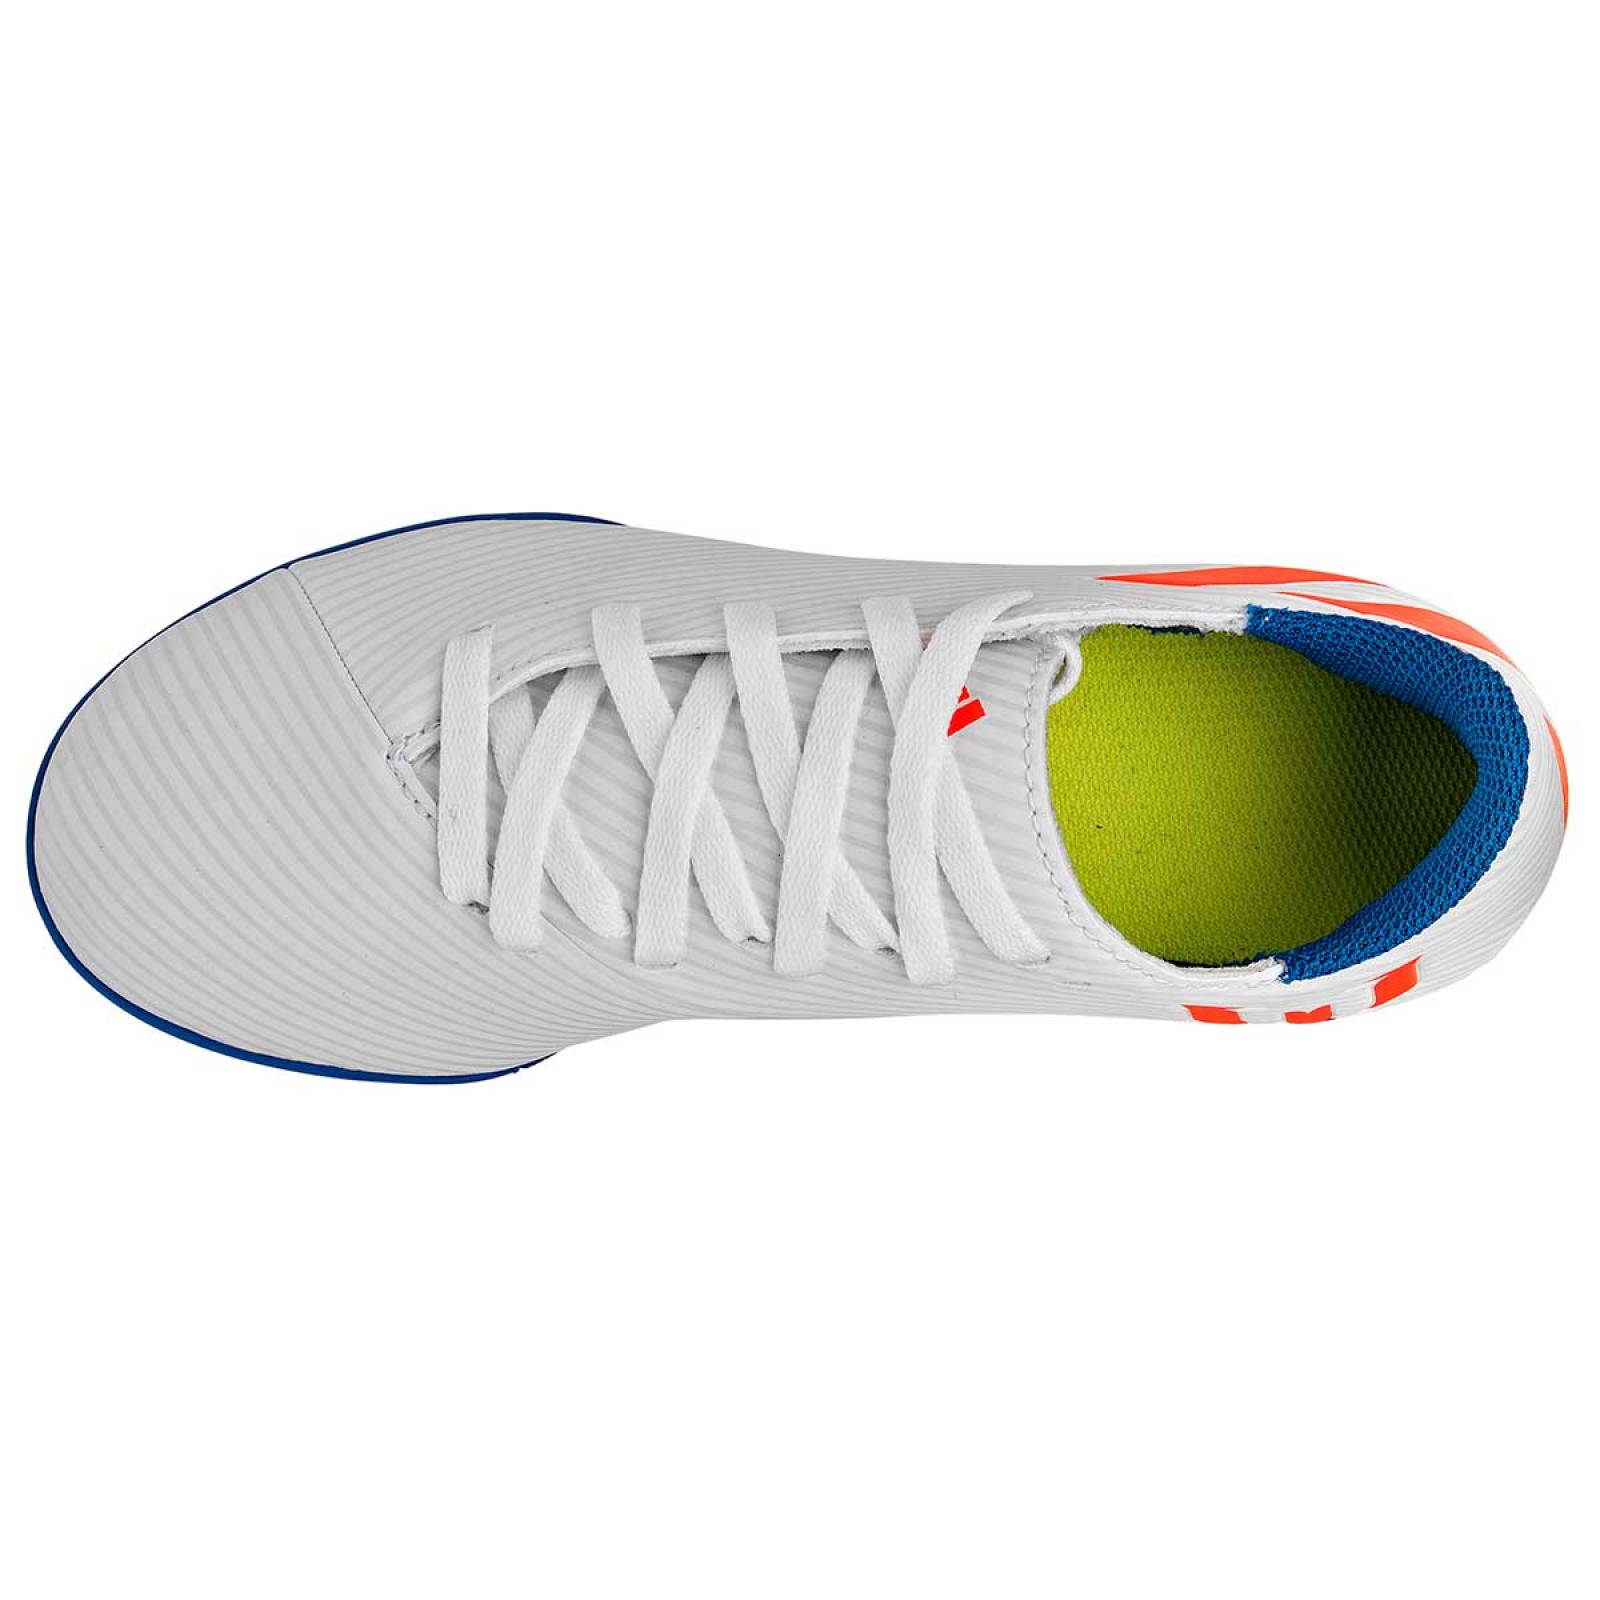 Adidas Tenis de joven 93178-1